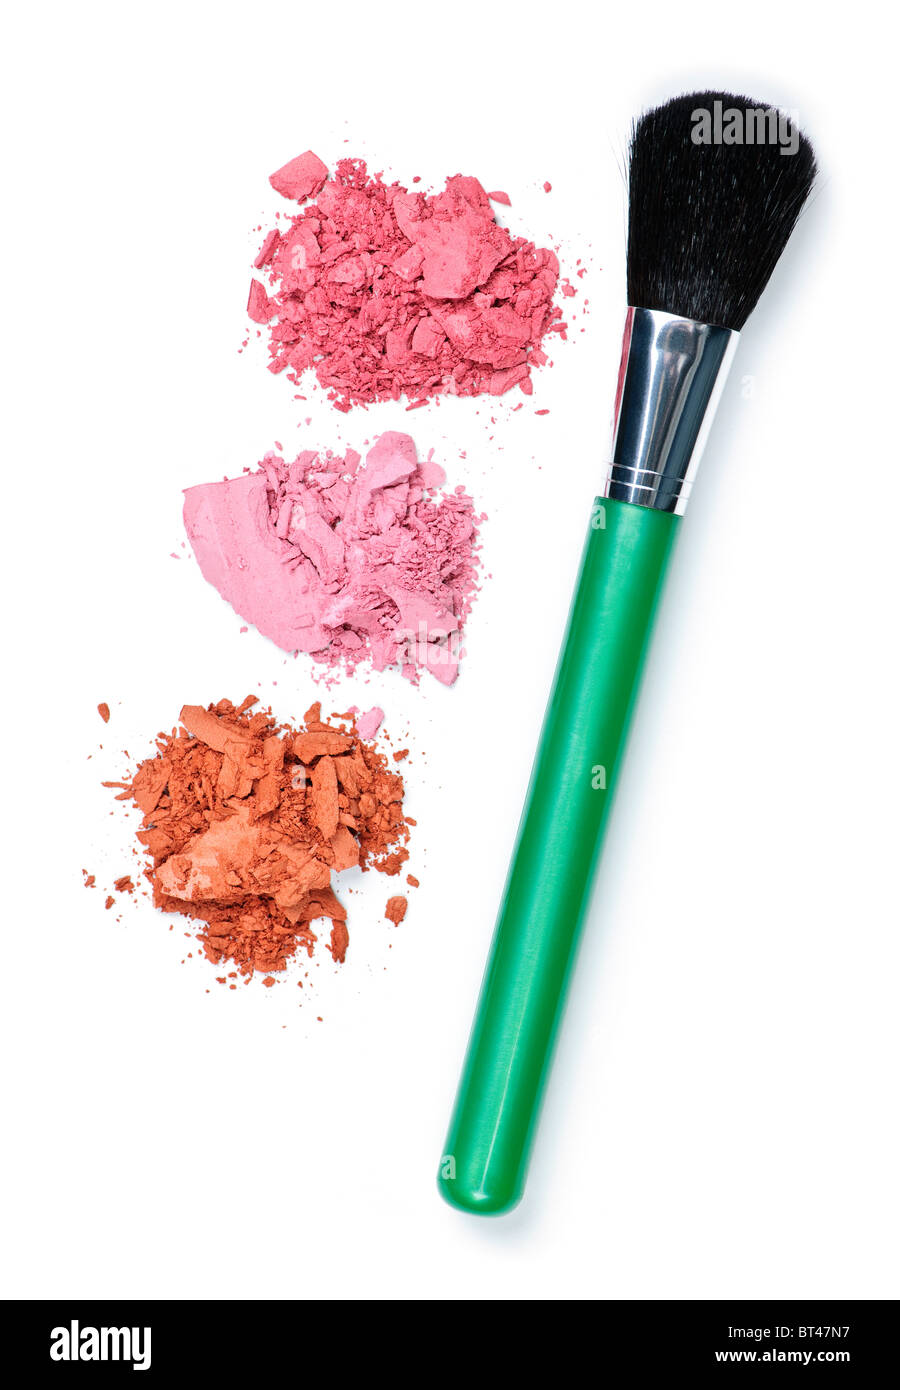 Blush cosmetics powder and makeup brush on white background Stock Photo